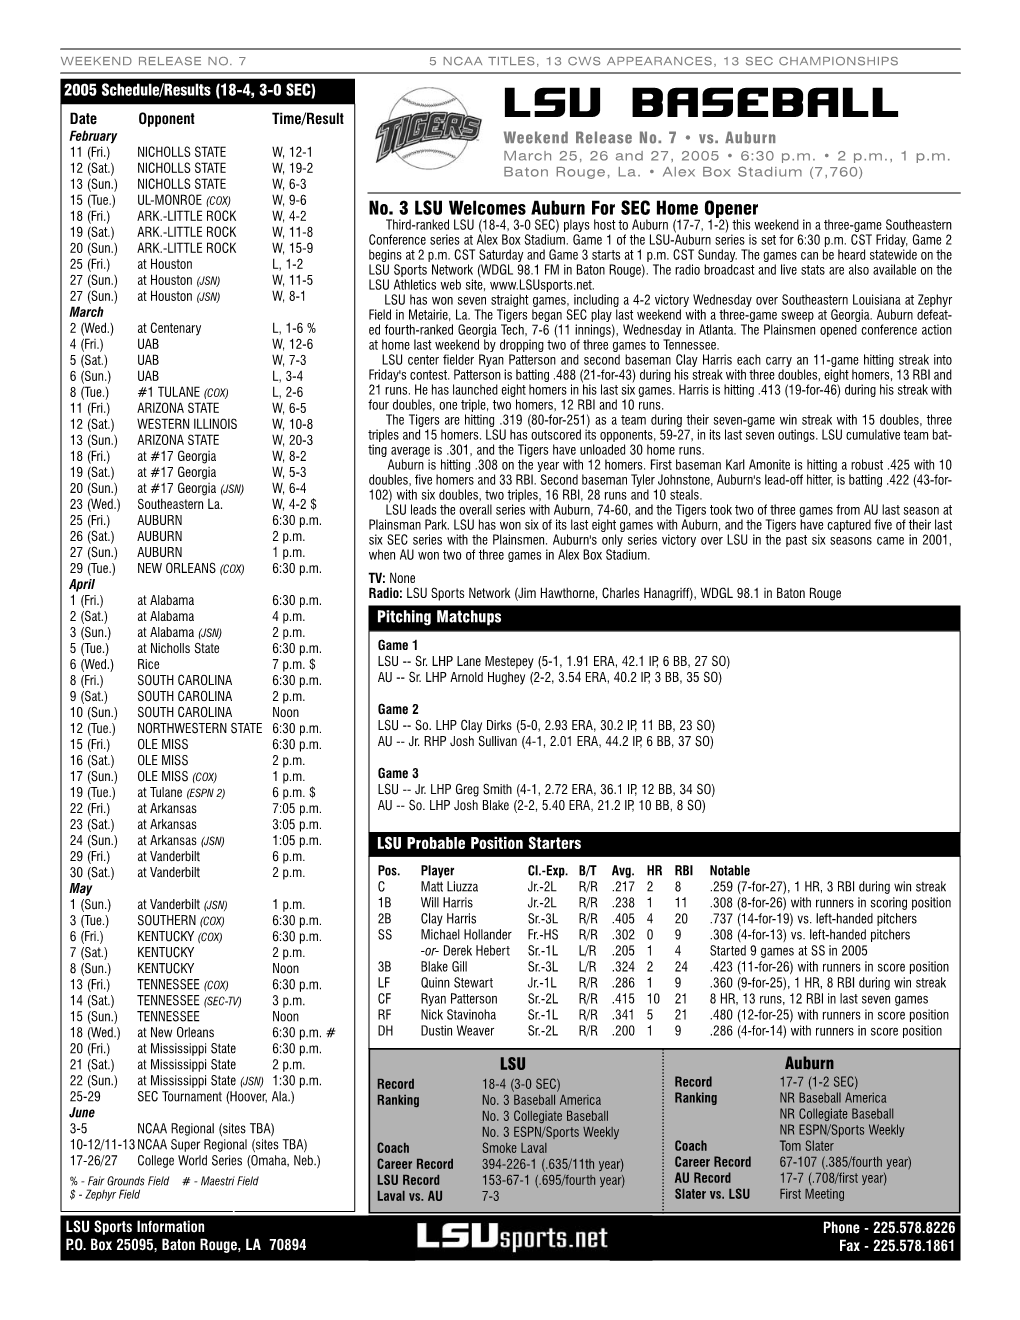 LSU Vs Auburn Game Notes 3 25 05.Qxd